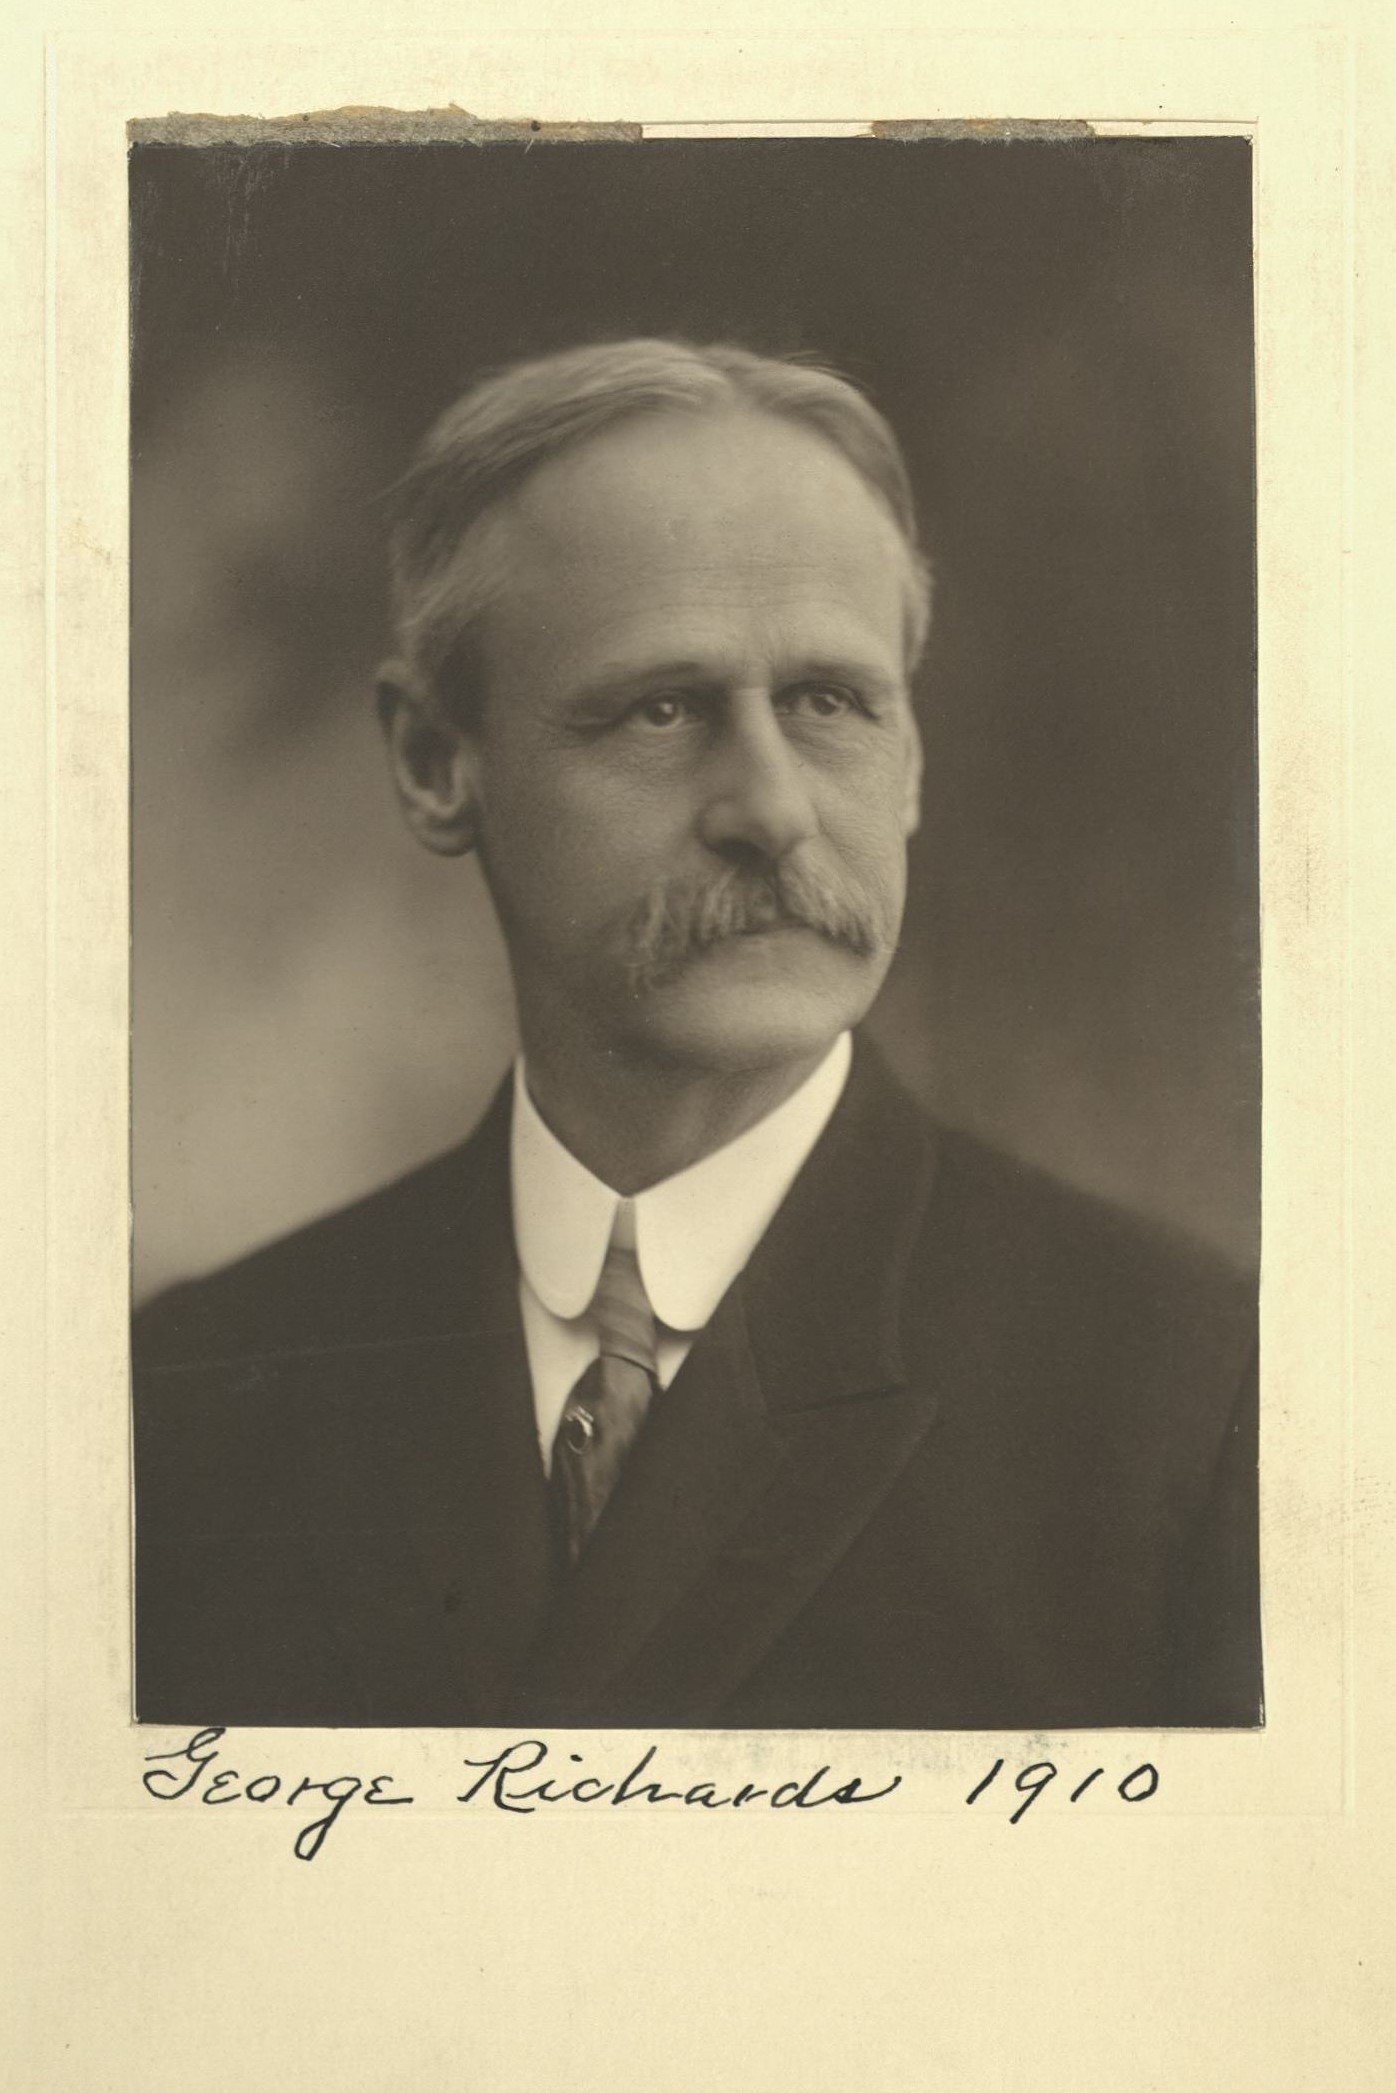 Member portrait of George Richards